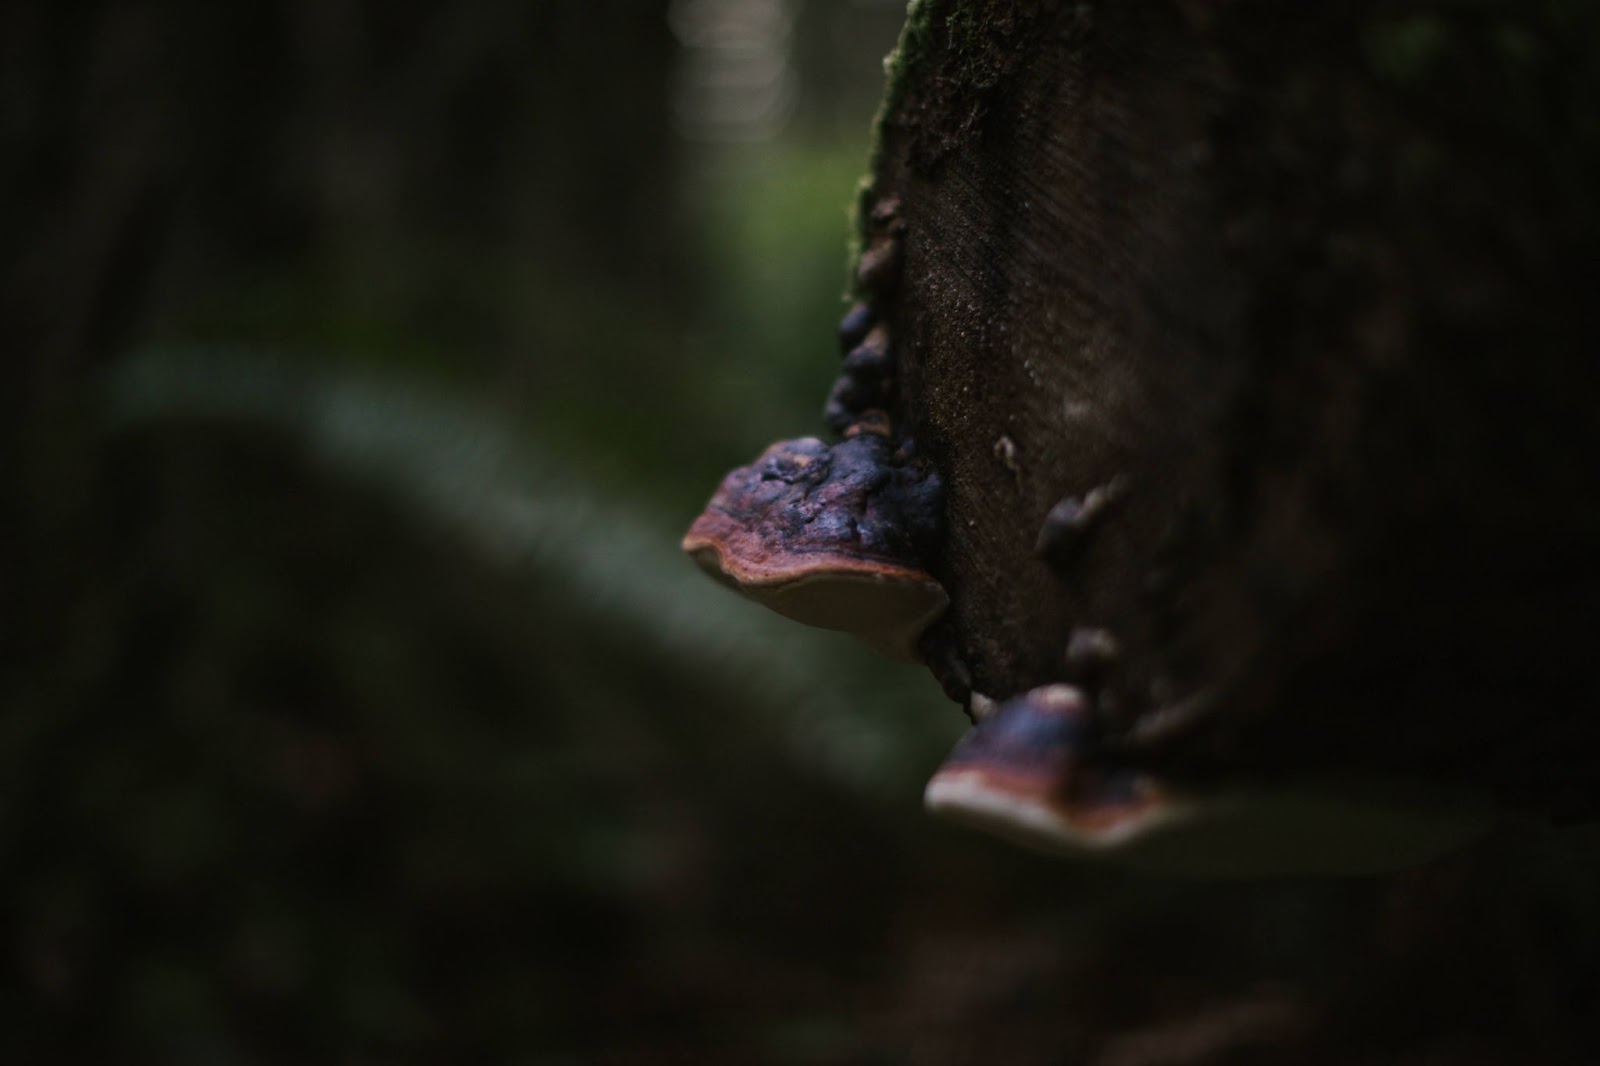 bracket mushrooms growing on the side of a tree stump